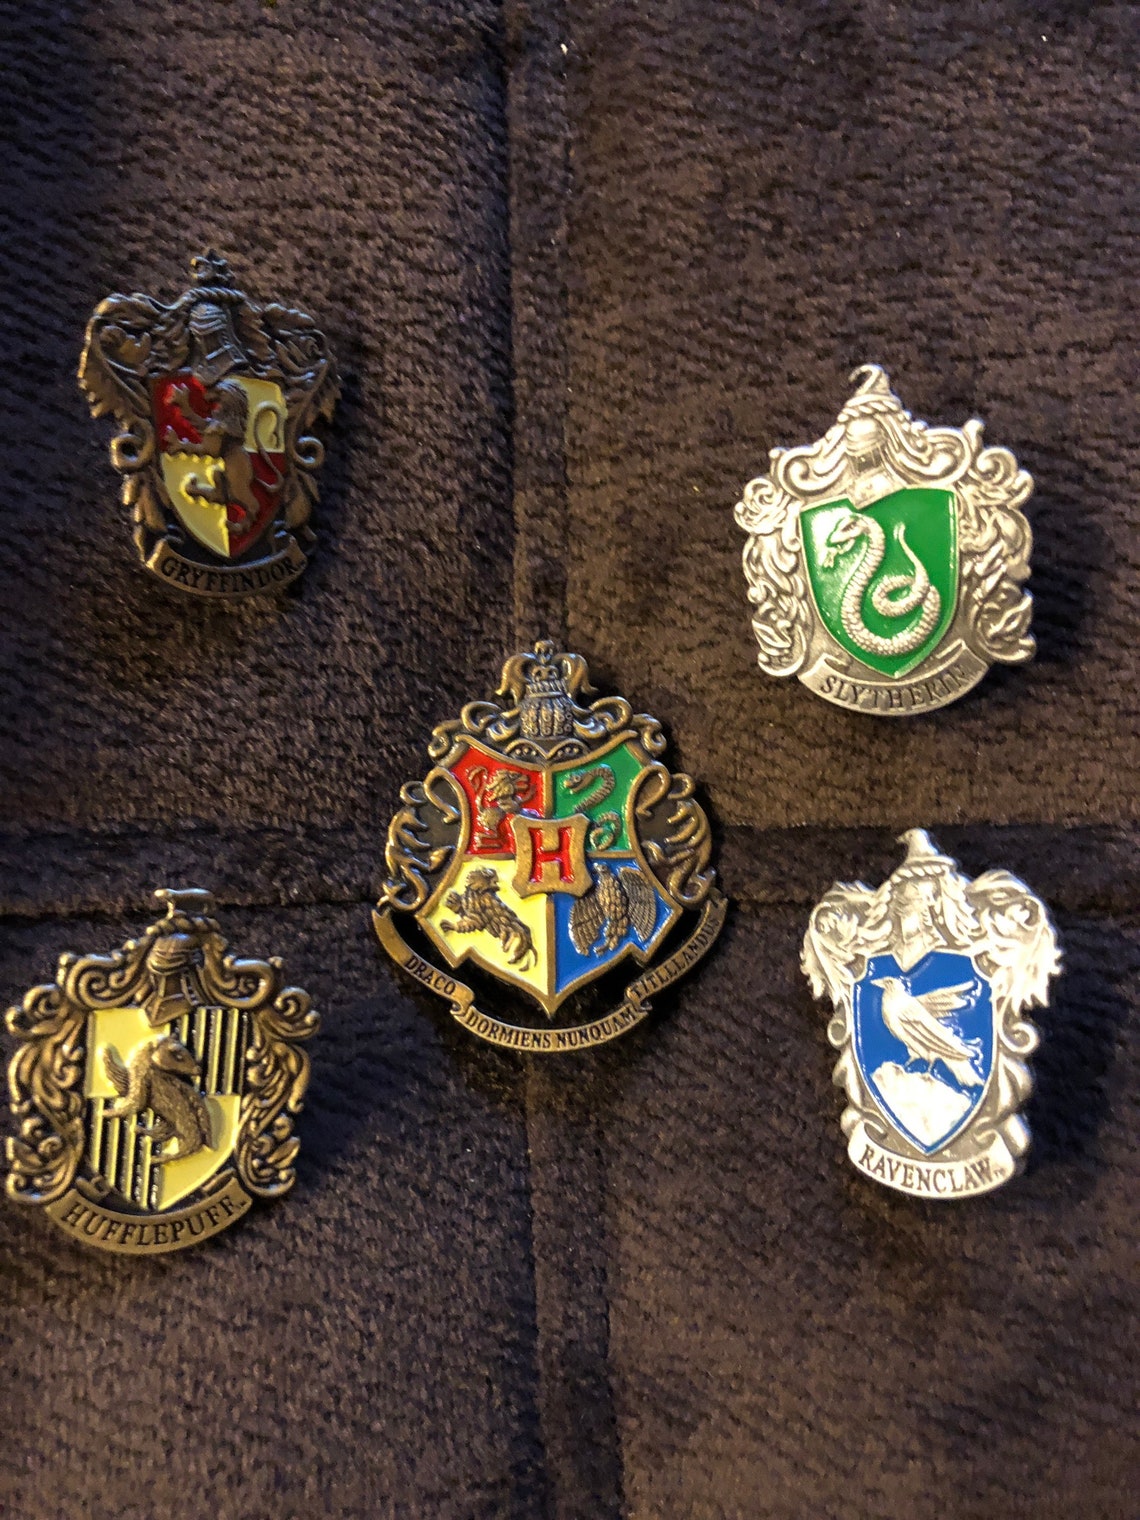 Harry Potter pins | Etsy